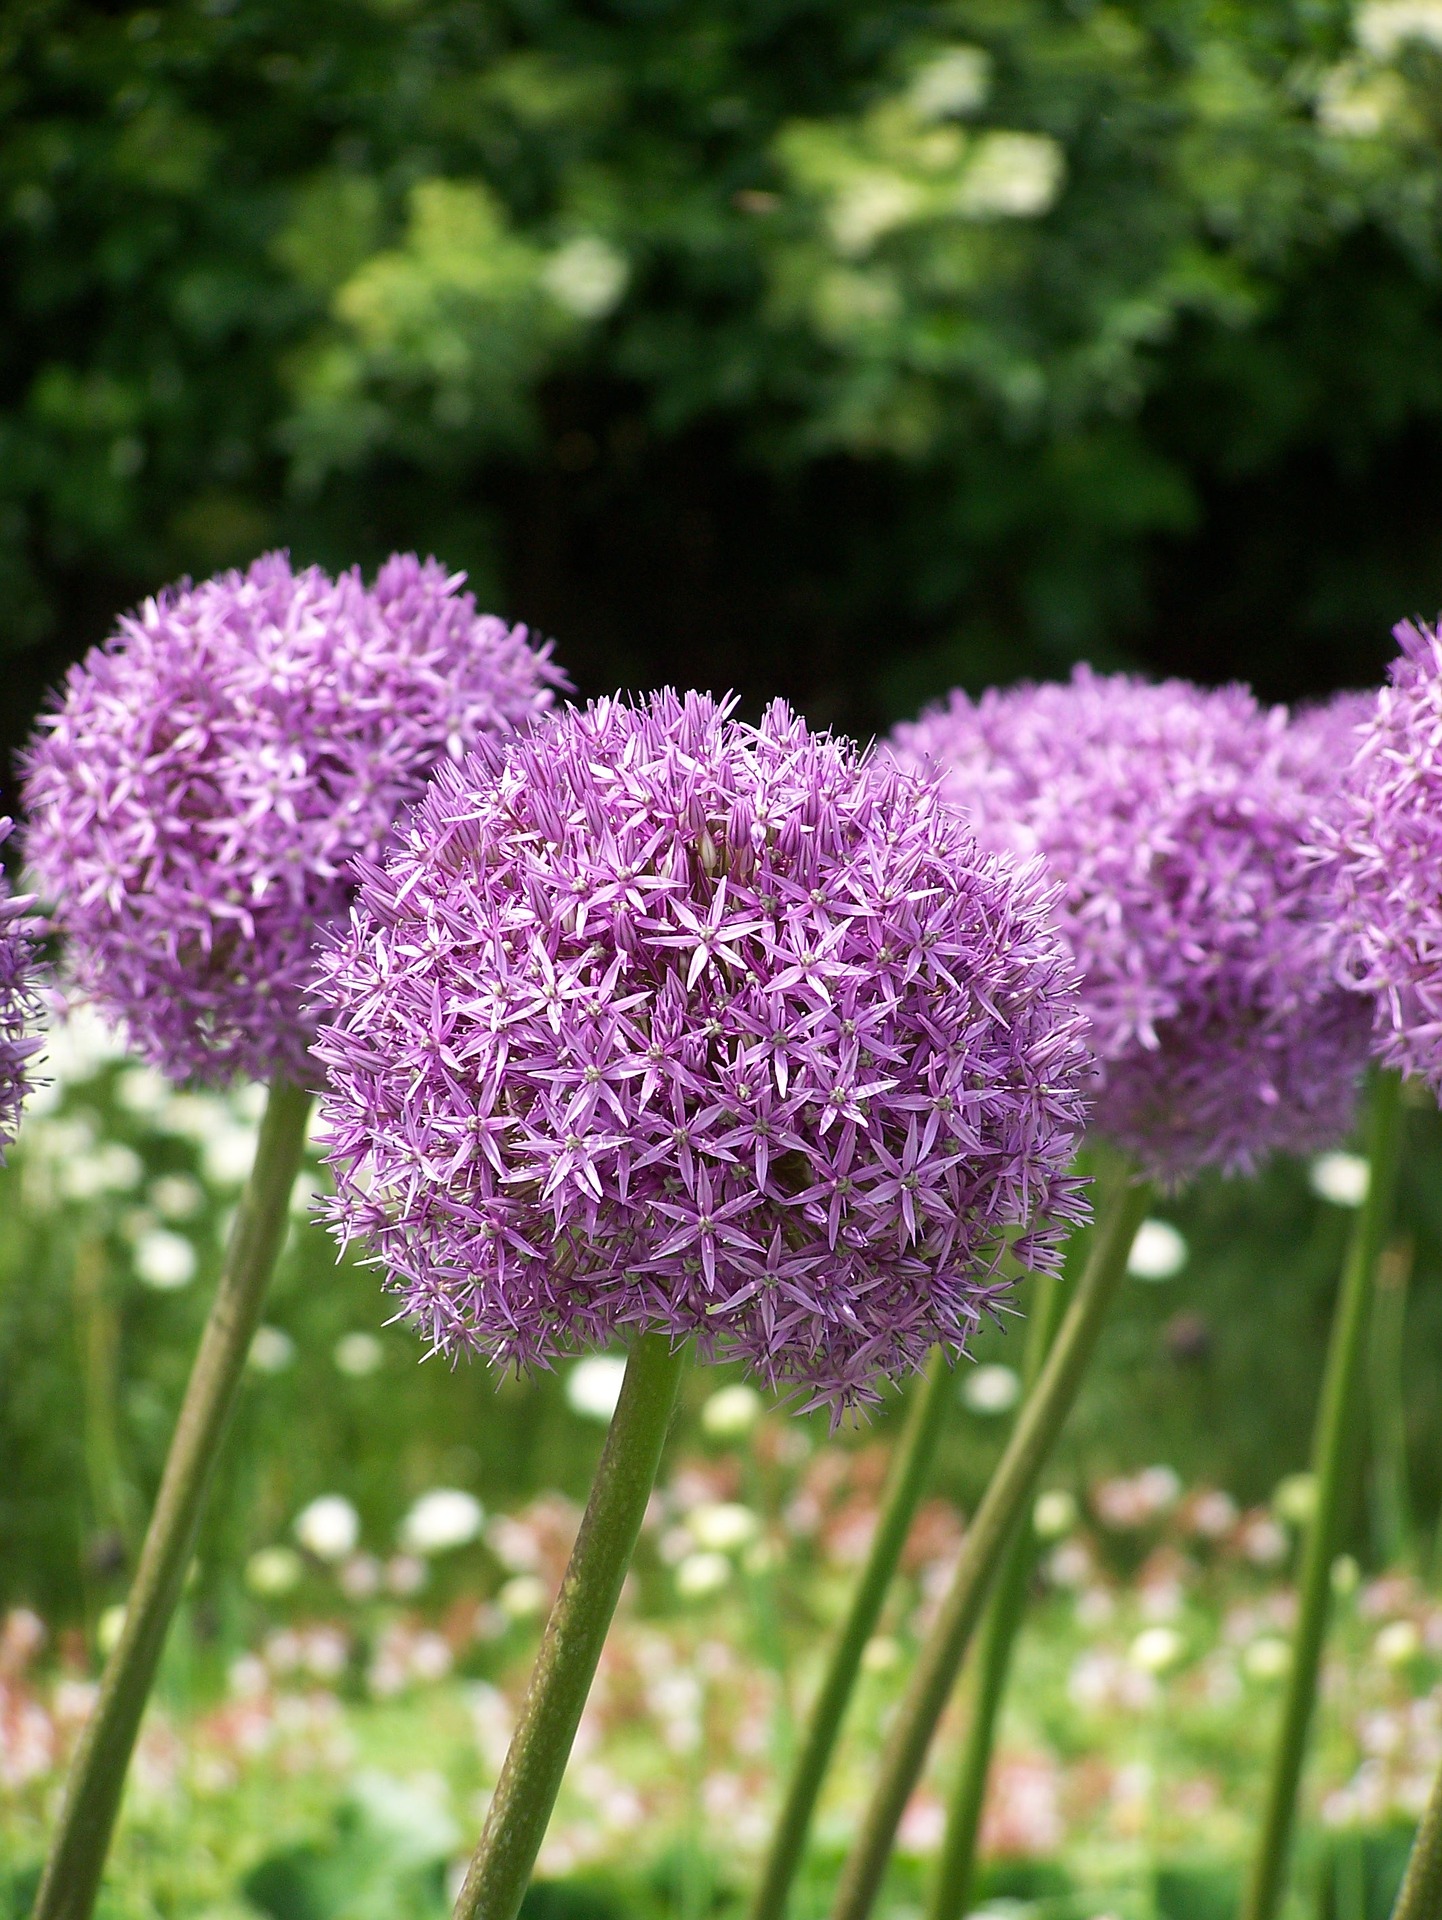 Allium have large purple pompom flowers